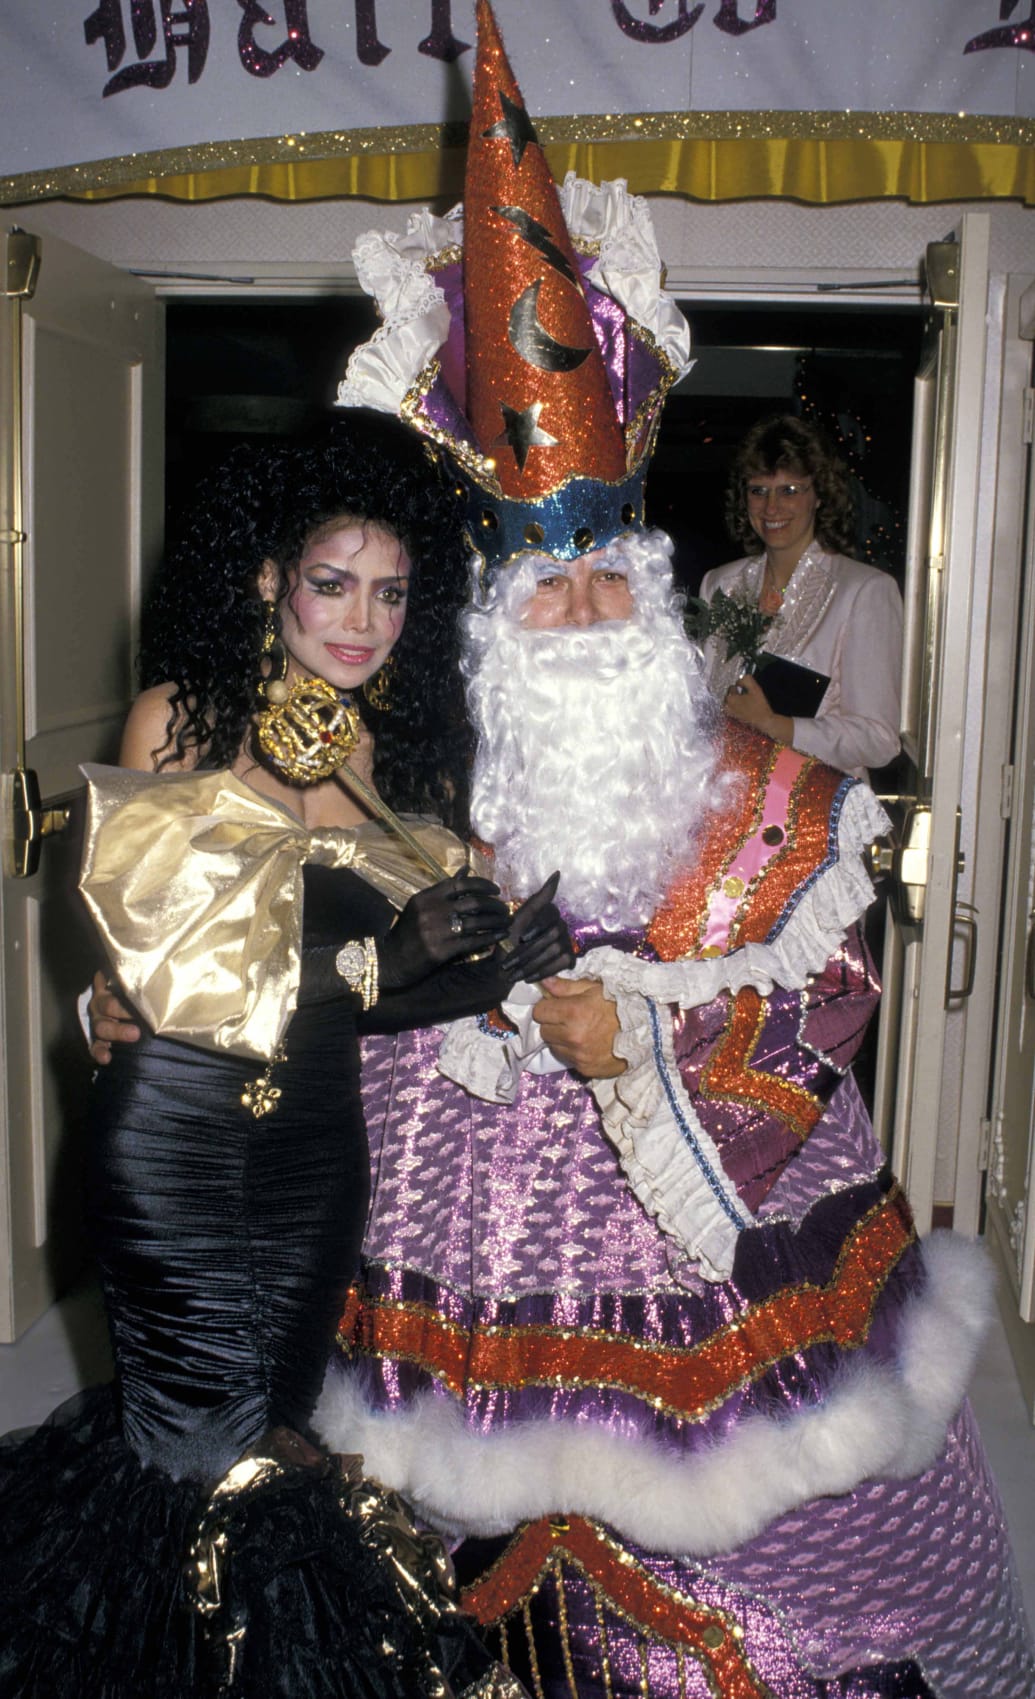 LaToya Jackson and some kind of mutant Santa Claus turn up at Trump’s 42nd birthday celebration in Atlantic City.